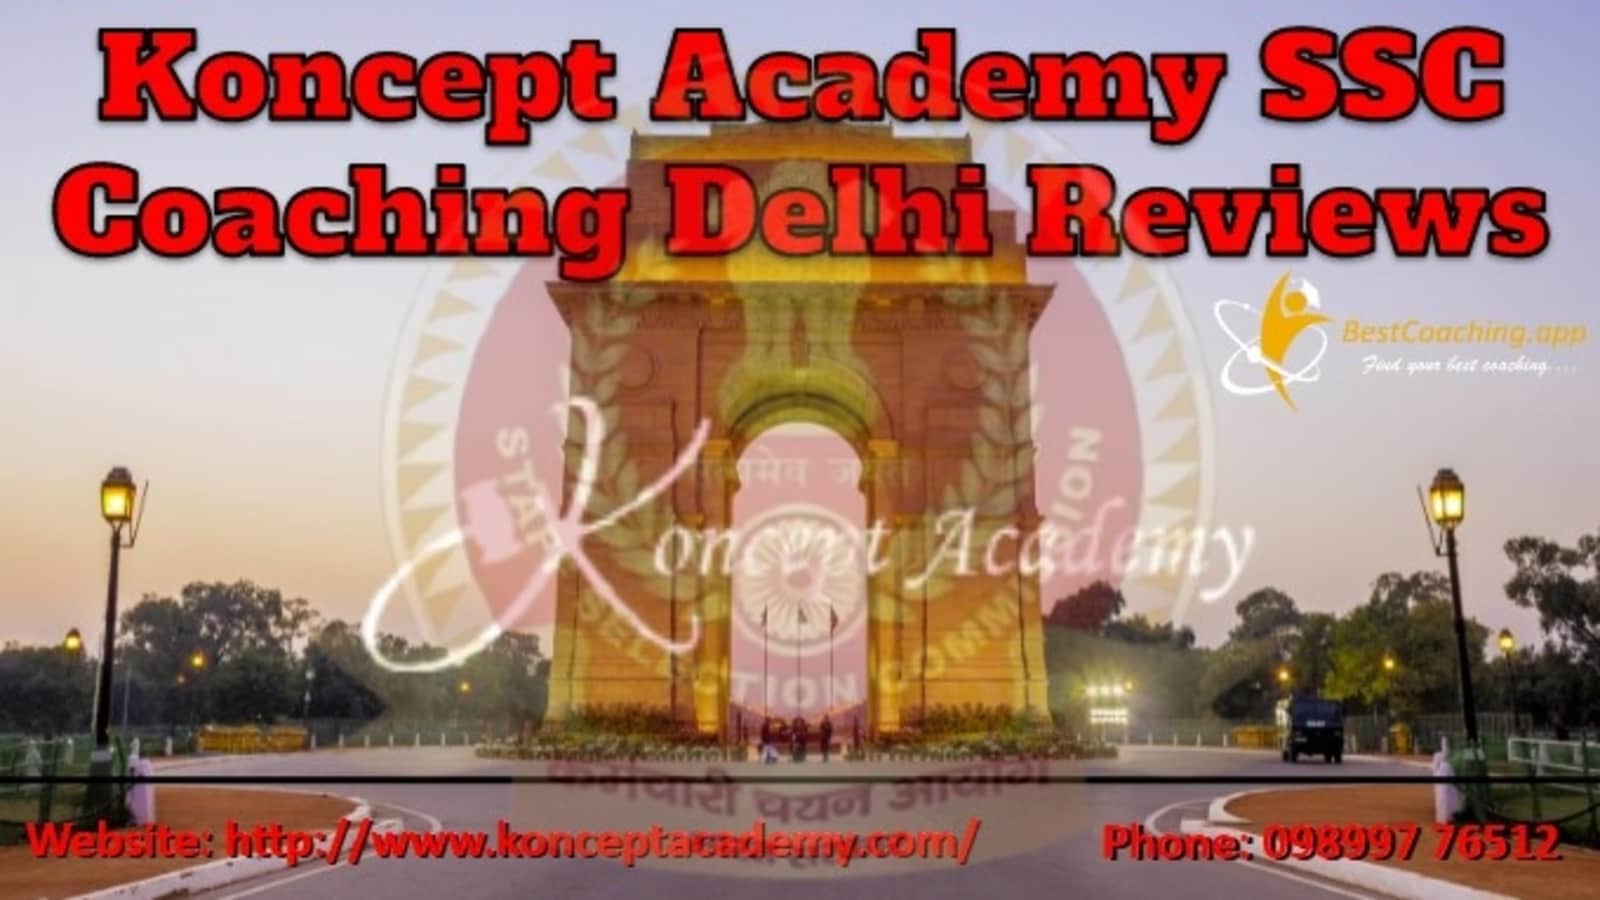 Koncept Academy SSC Coaching in Delhi